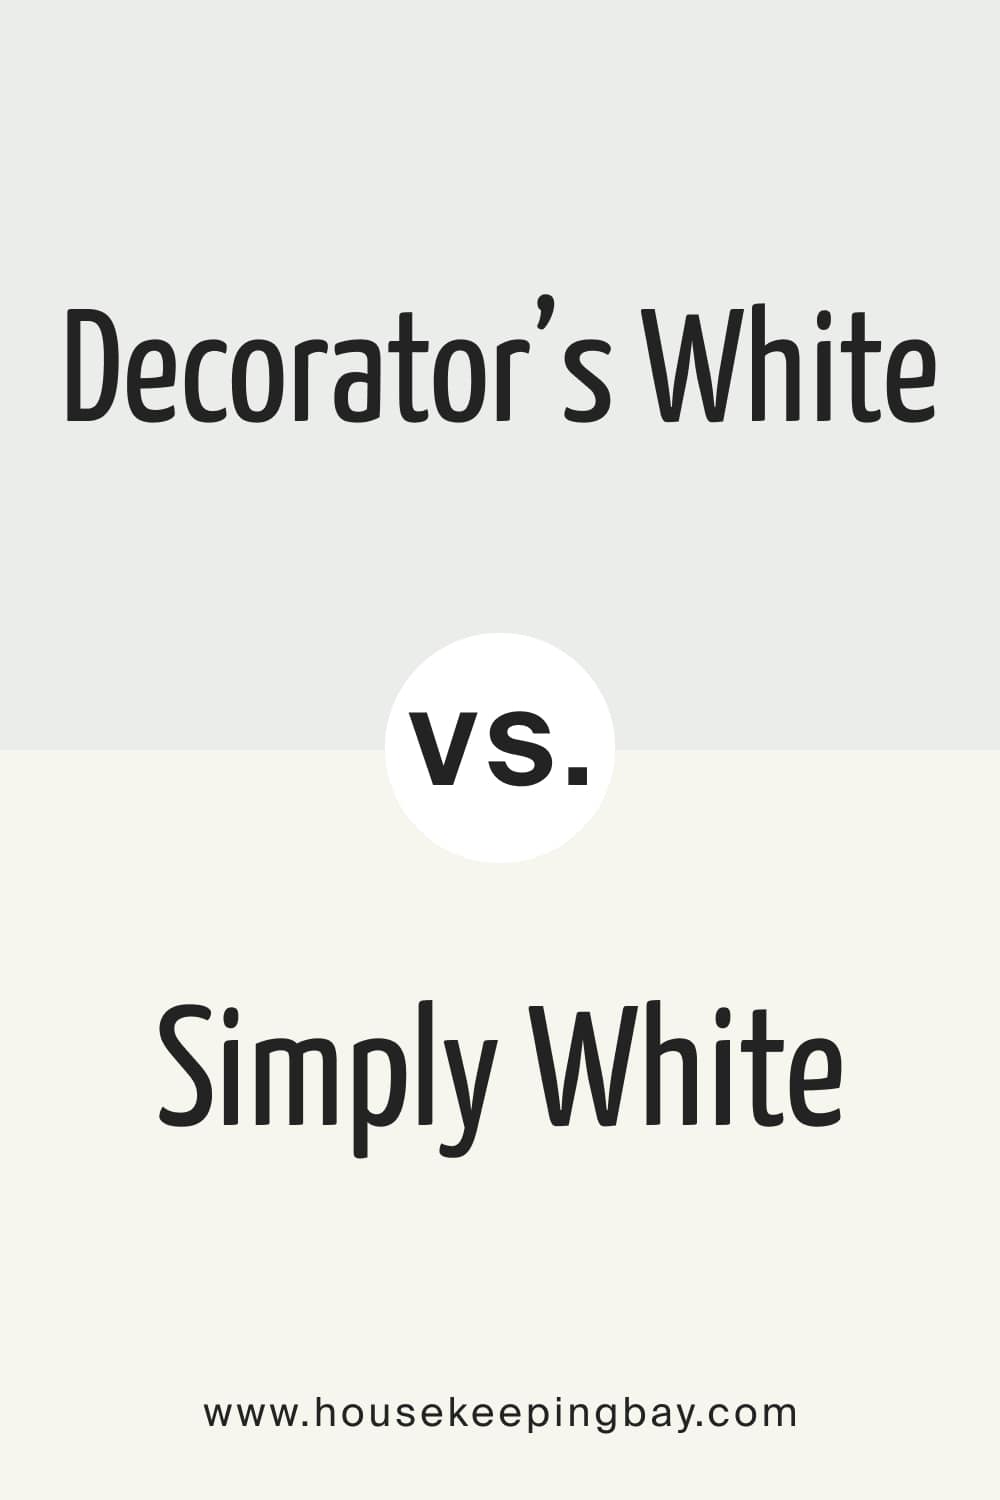 Decorator’s White vs. Simply White